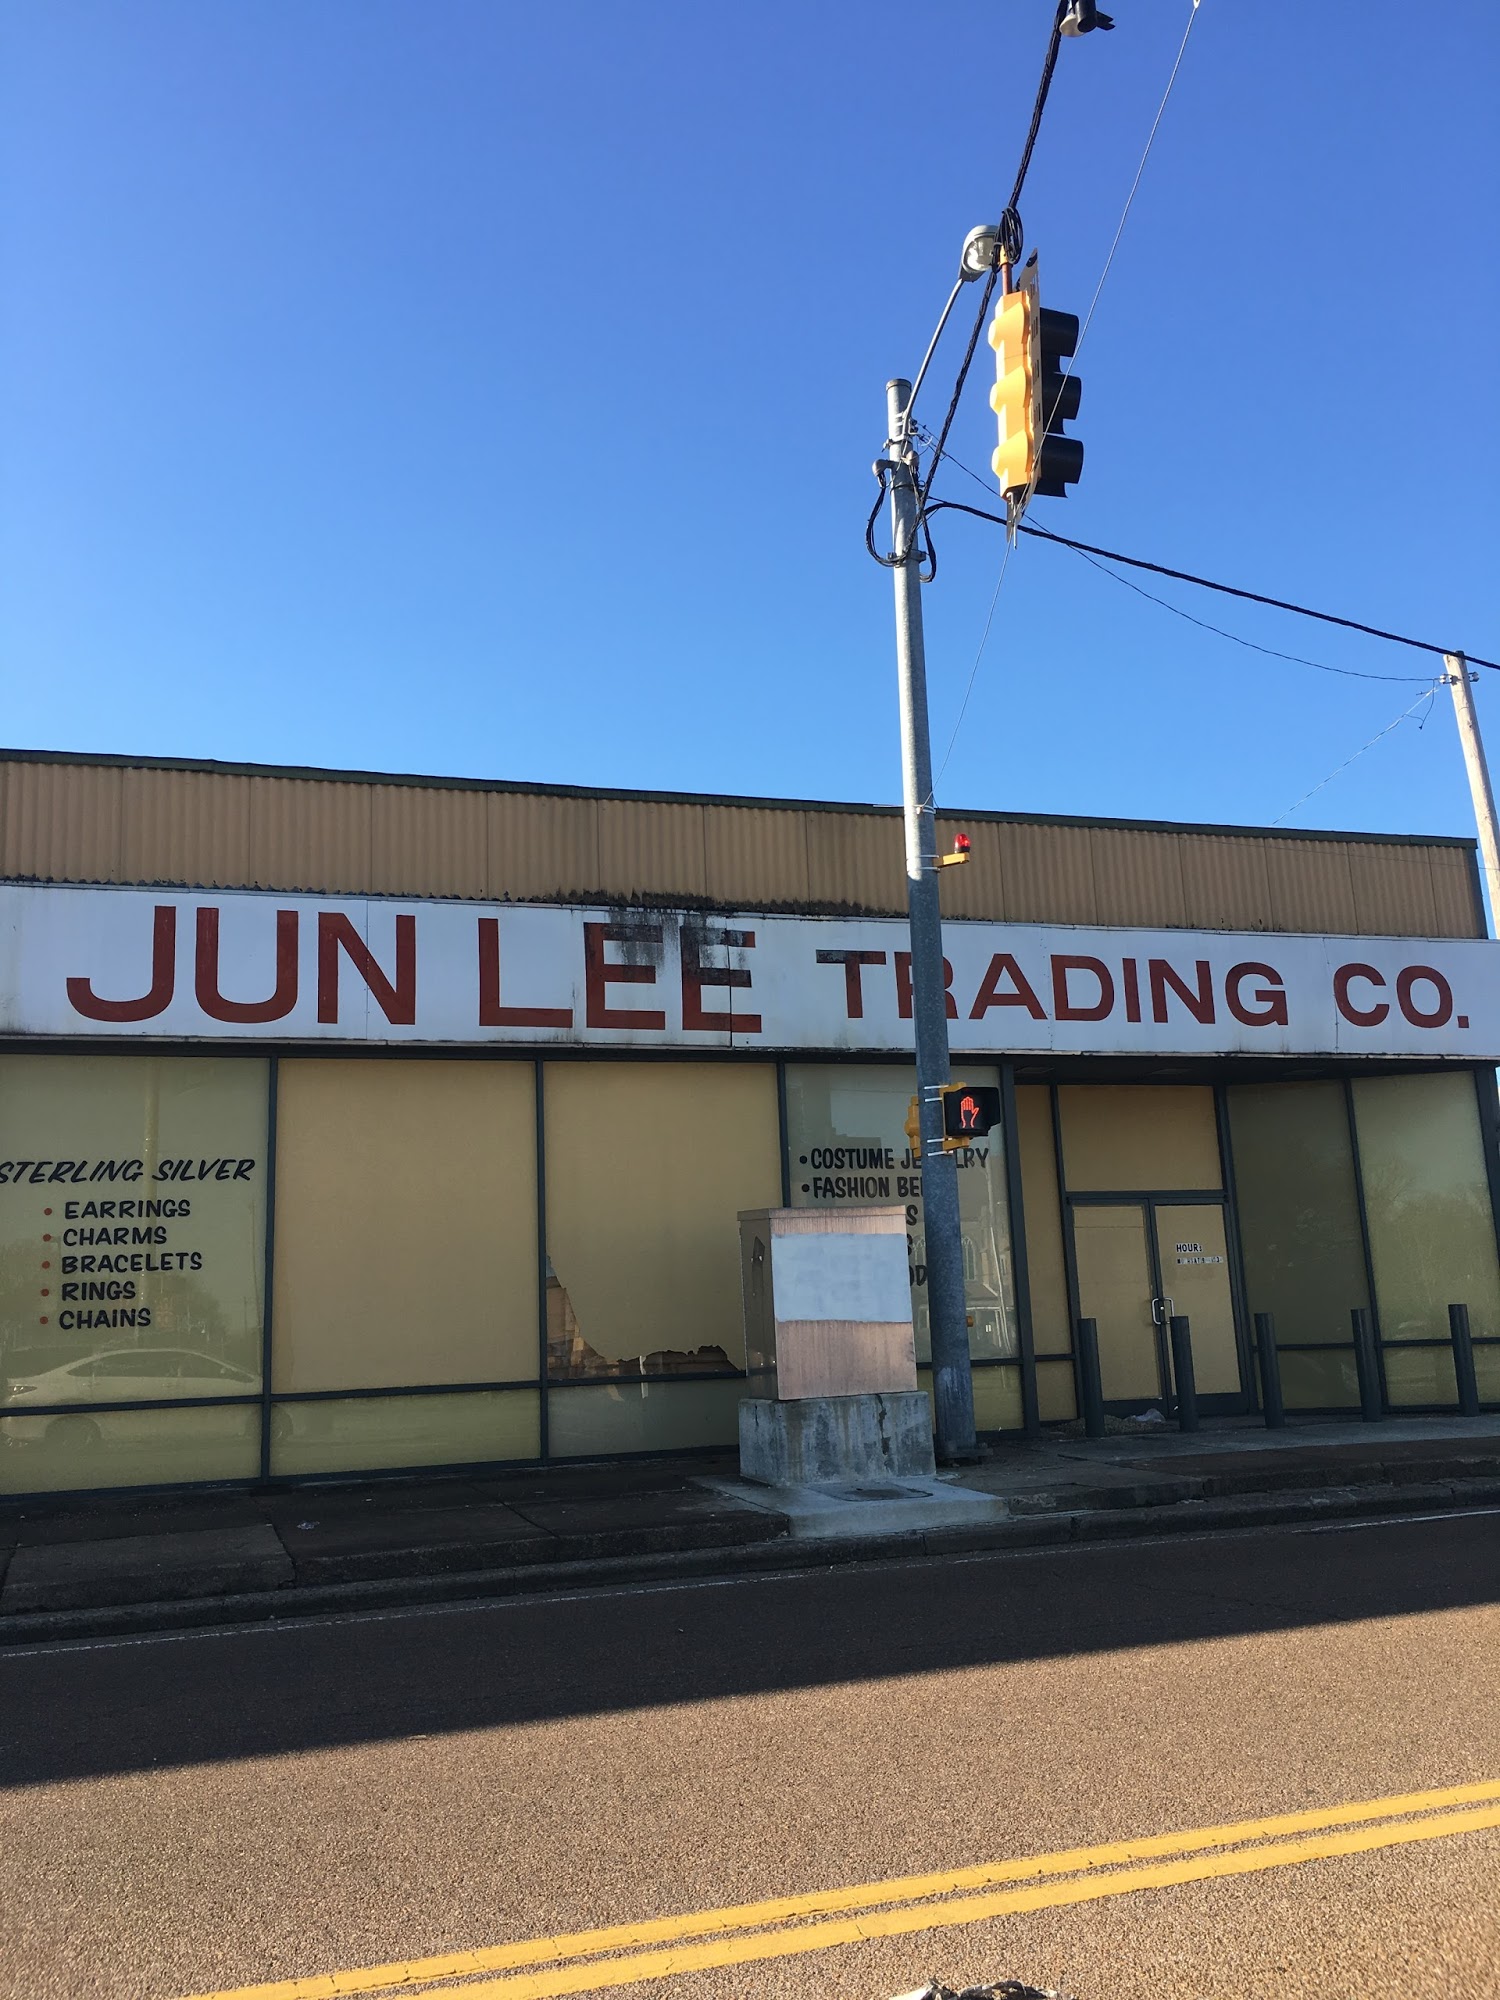 Jun Lee Trading Co.